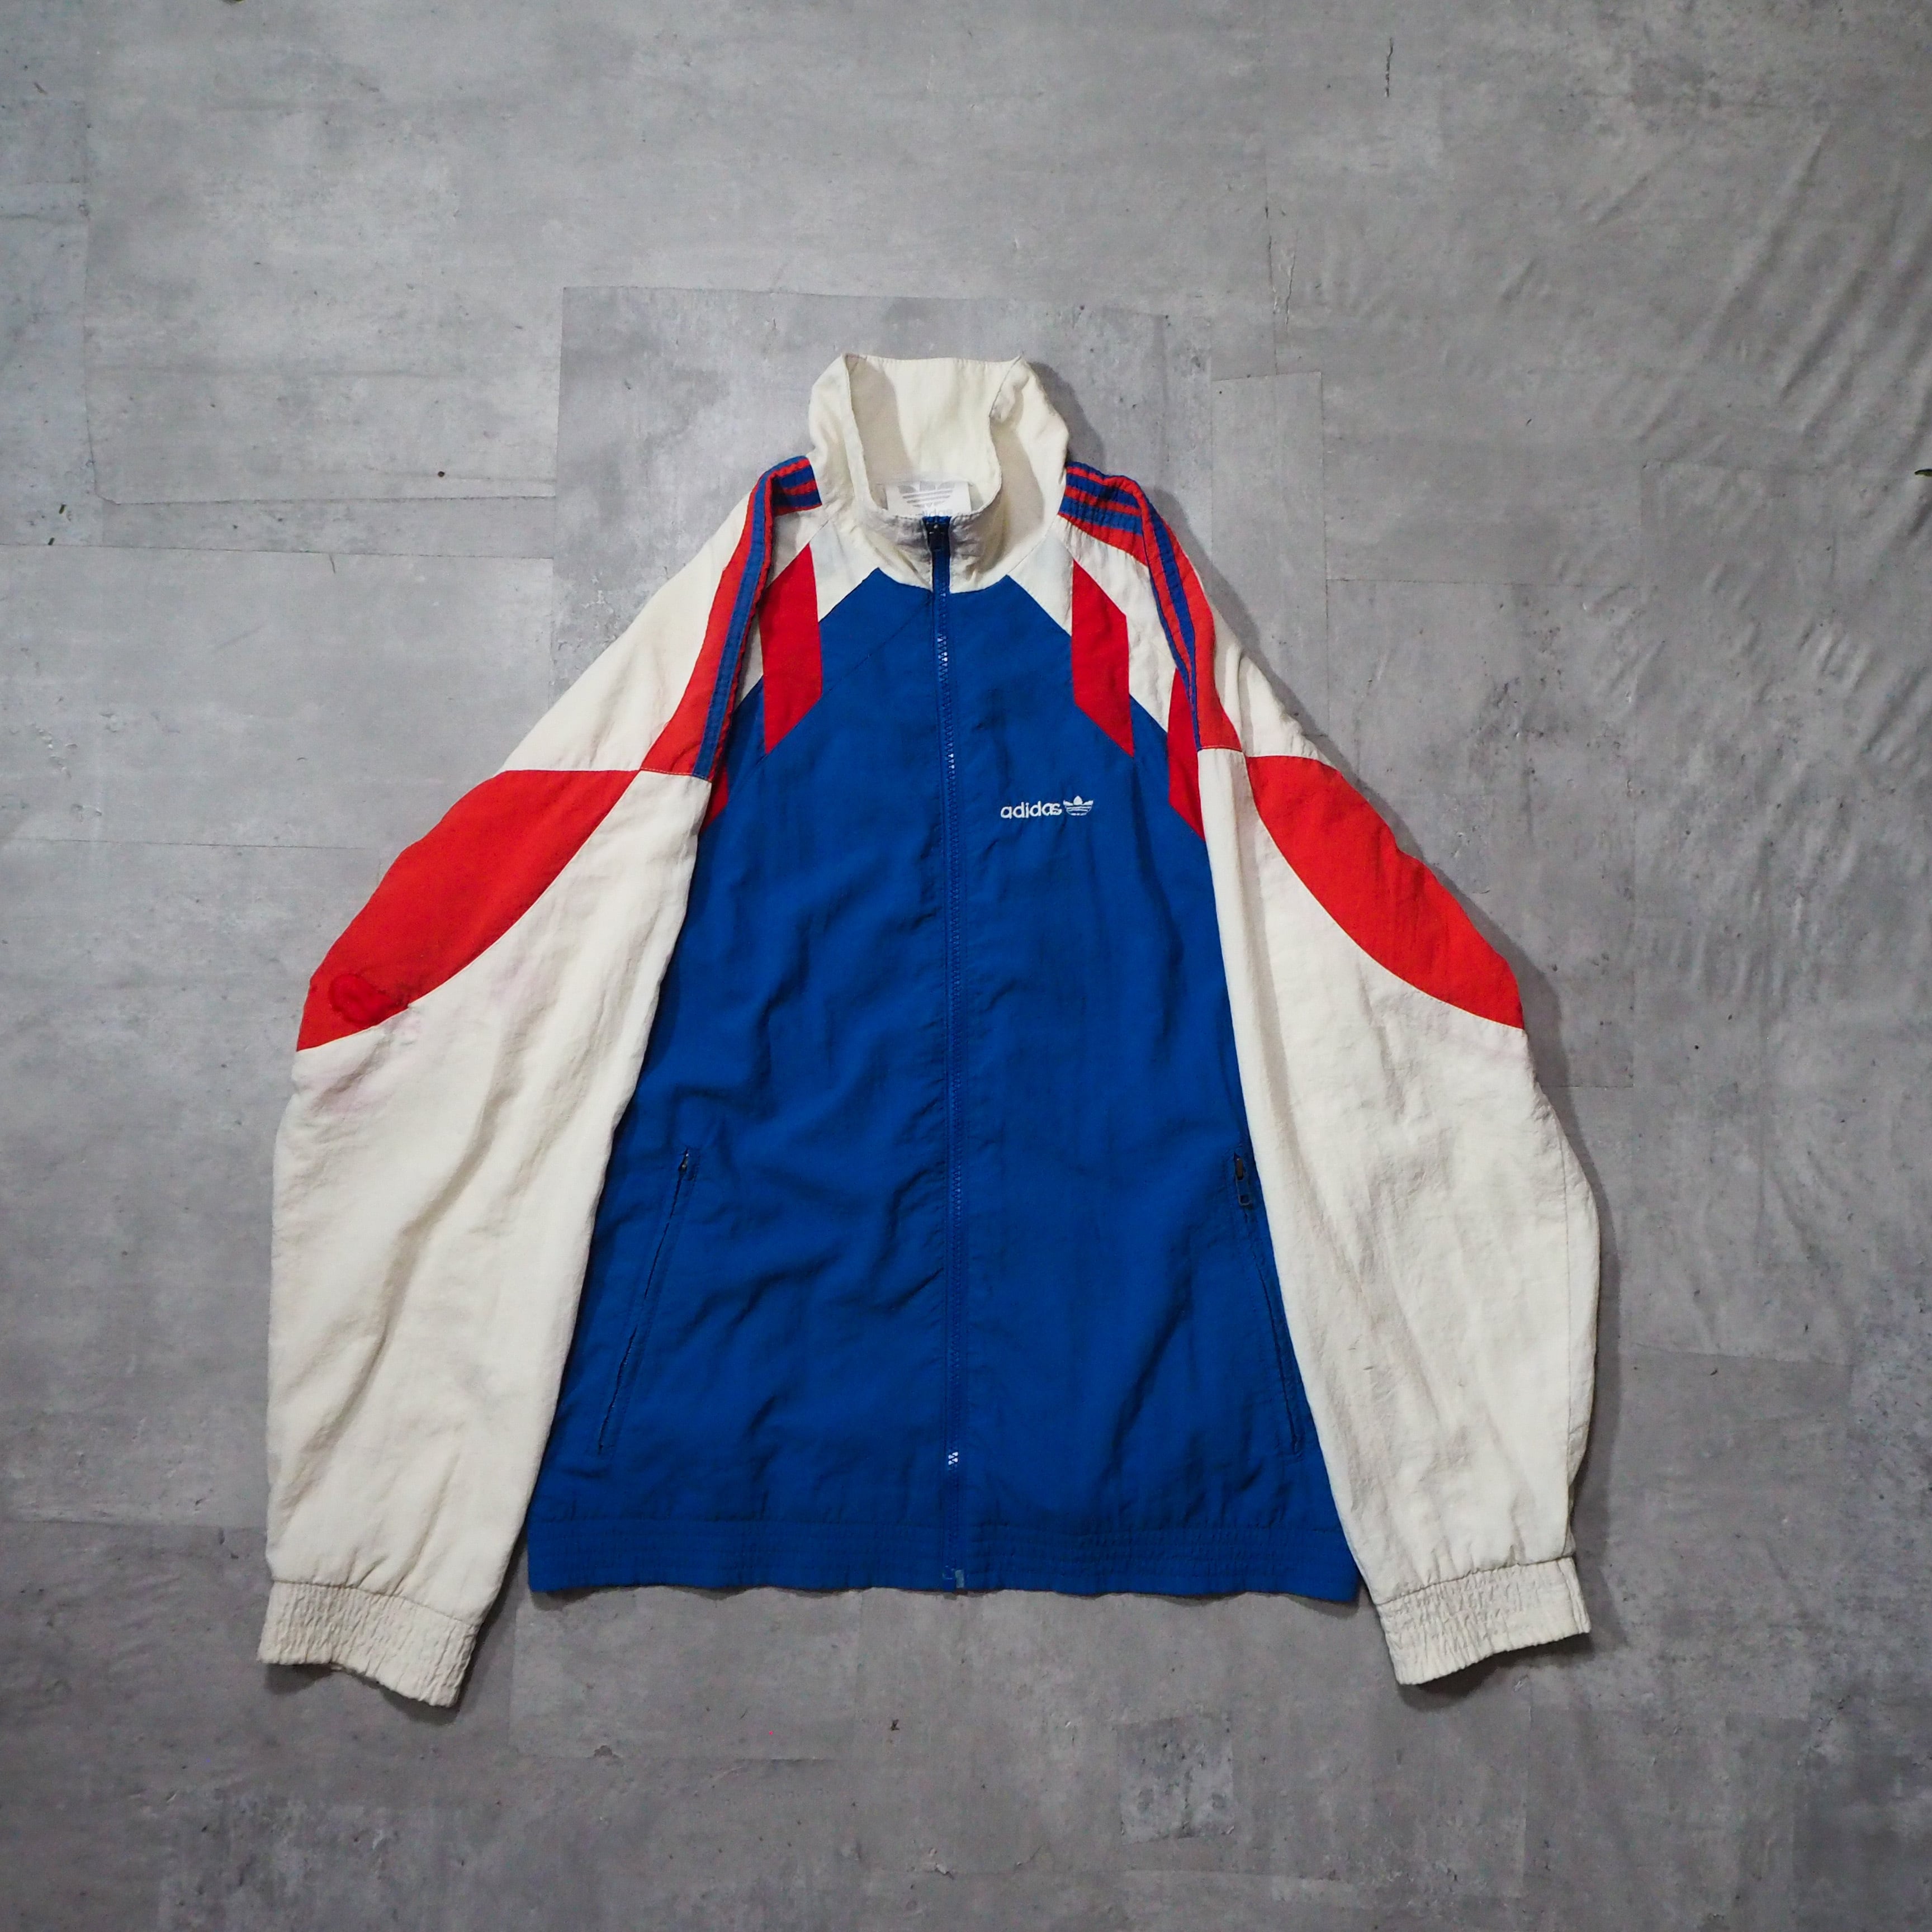 80s-90s “adidas” nylon jacket 80年代 90年代 アディダス ナイロンジャケット